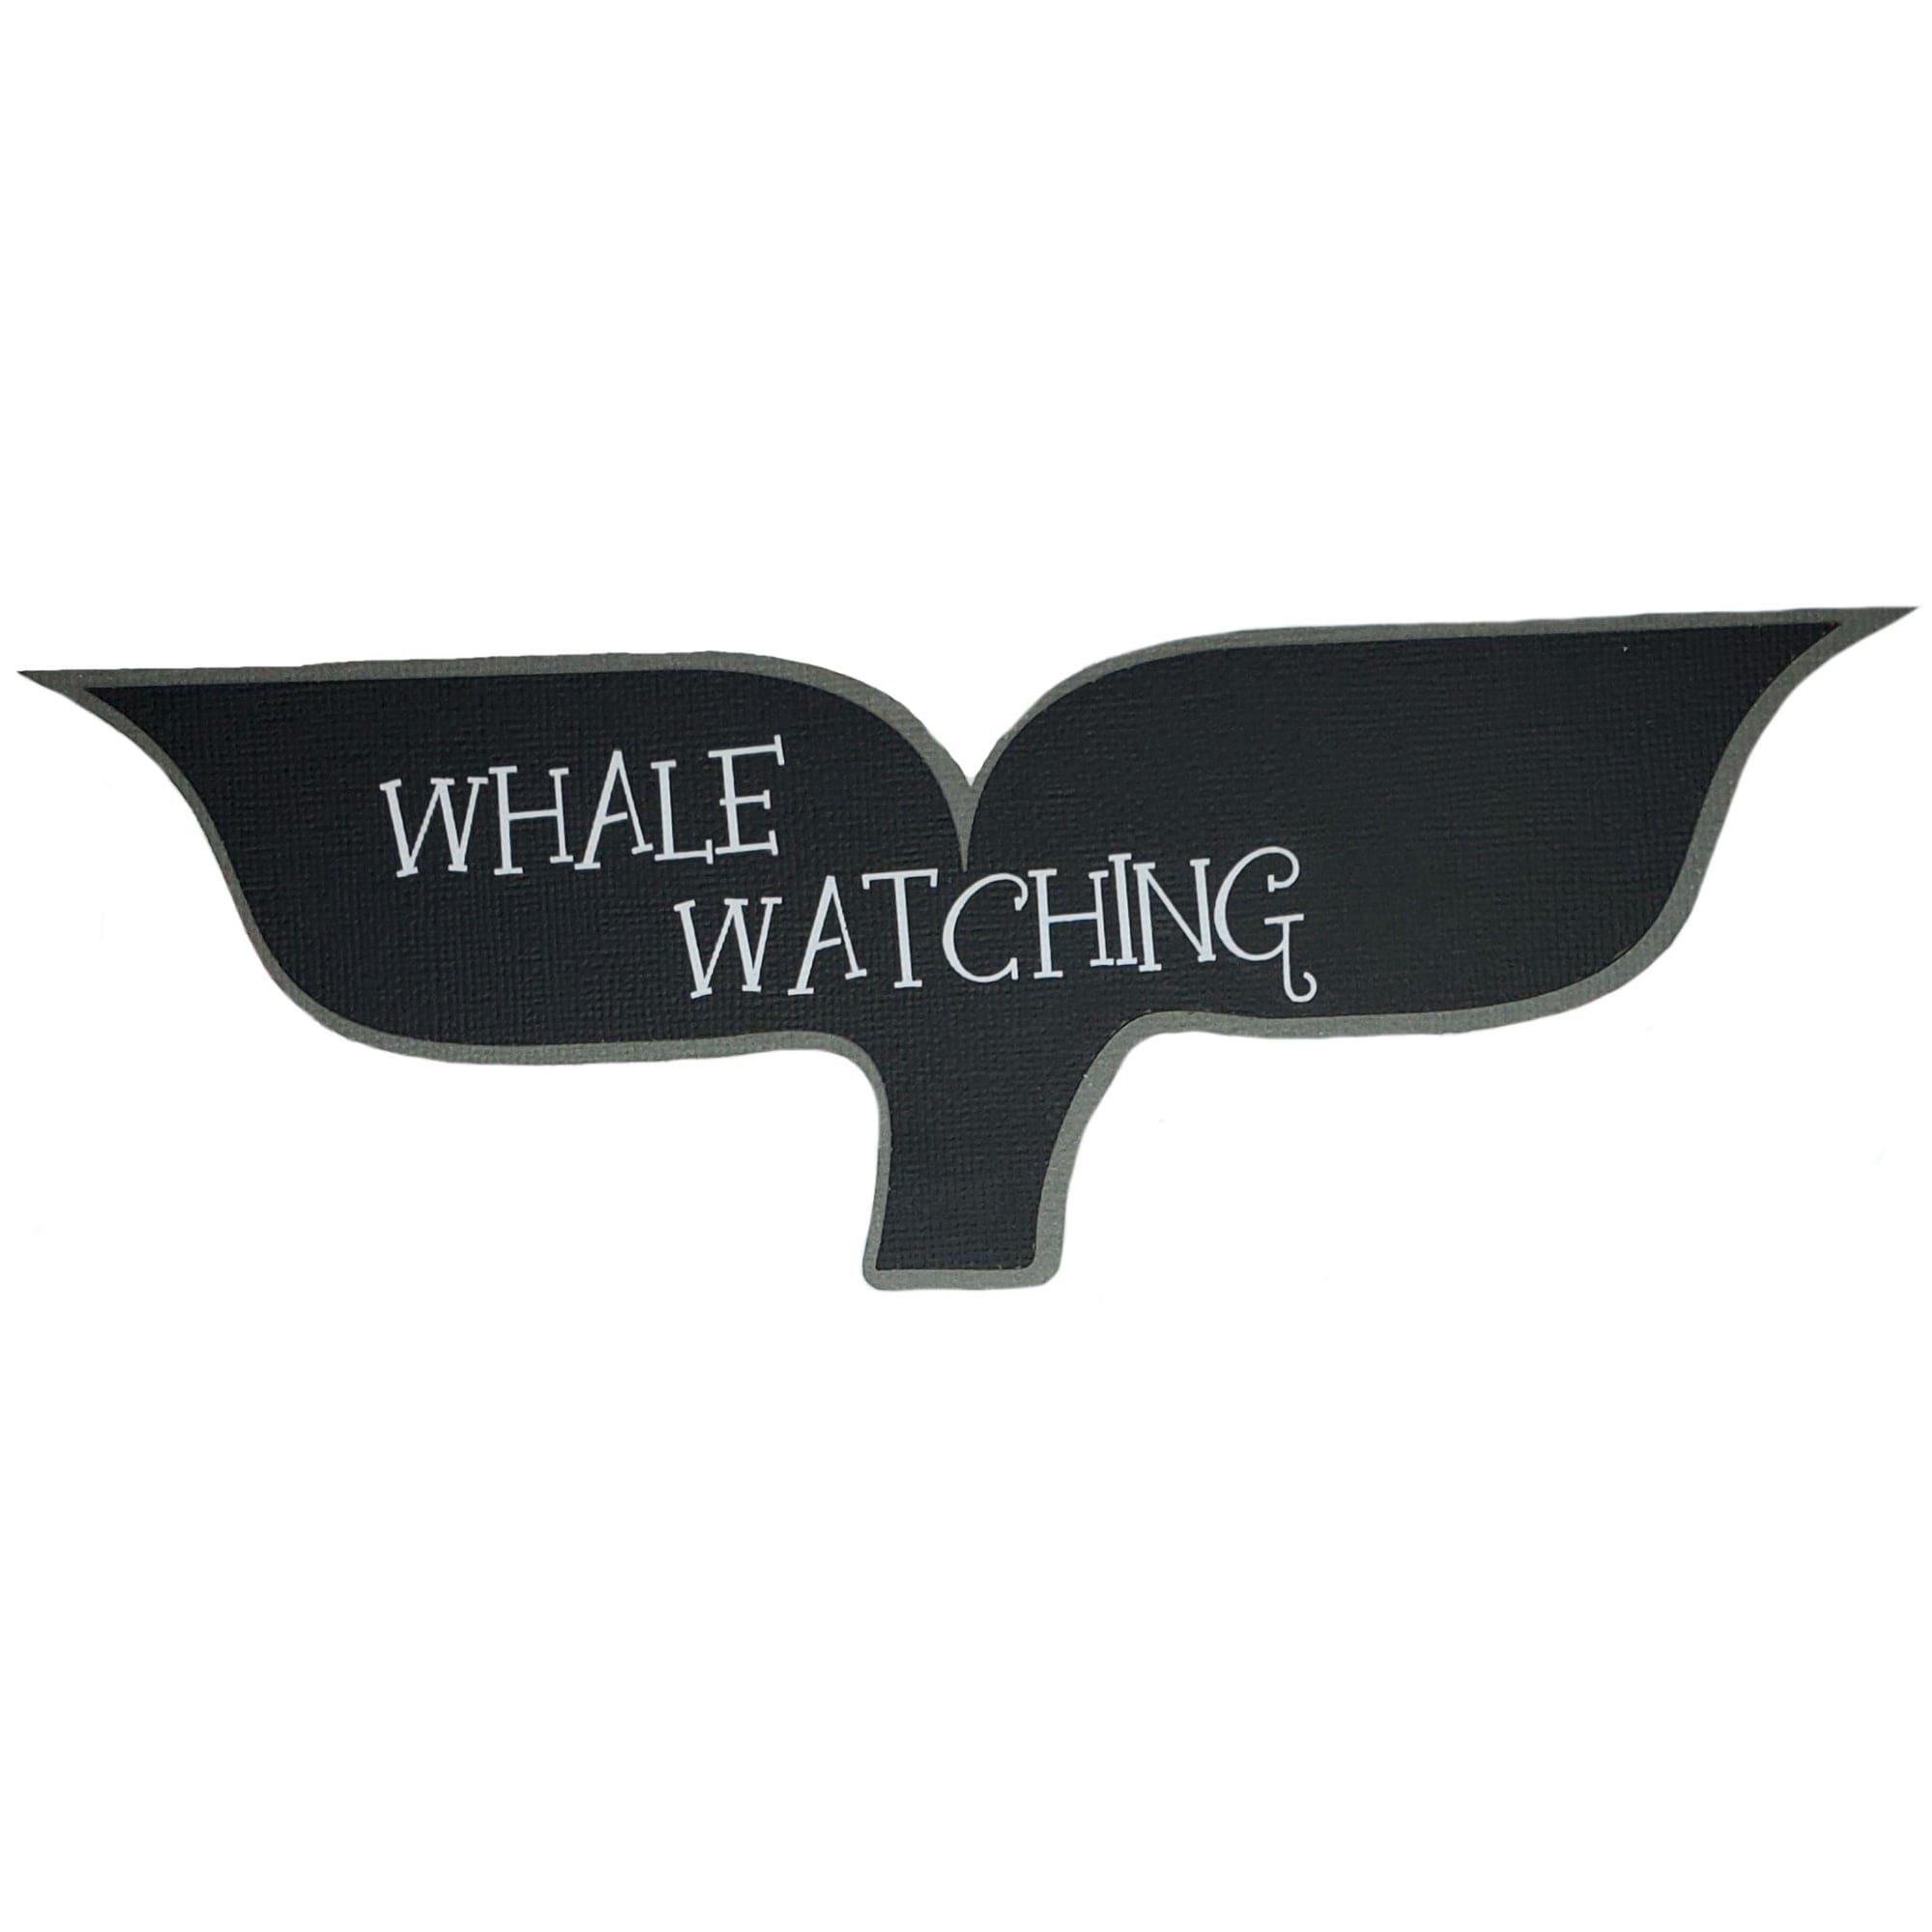 Whale Watching 9.5 x 3 Laser Cut Scrapbook Embellishment by SSC Laser Designs